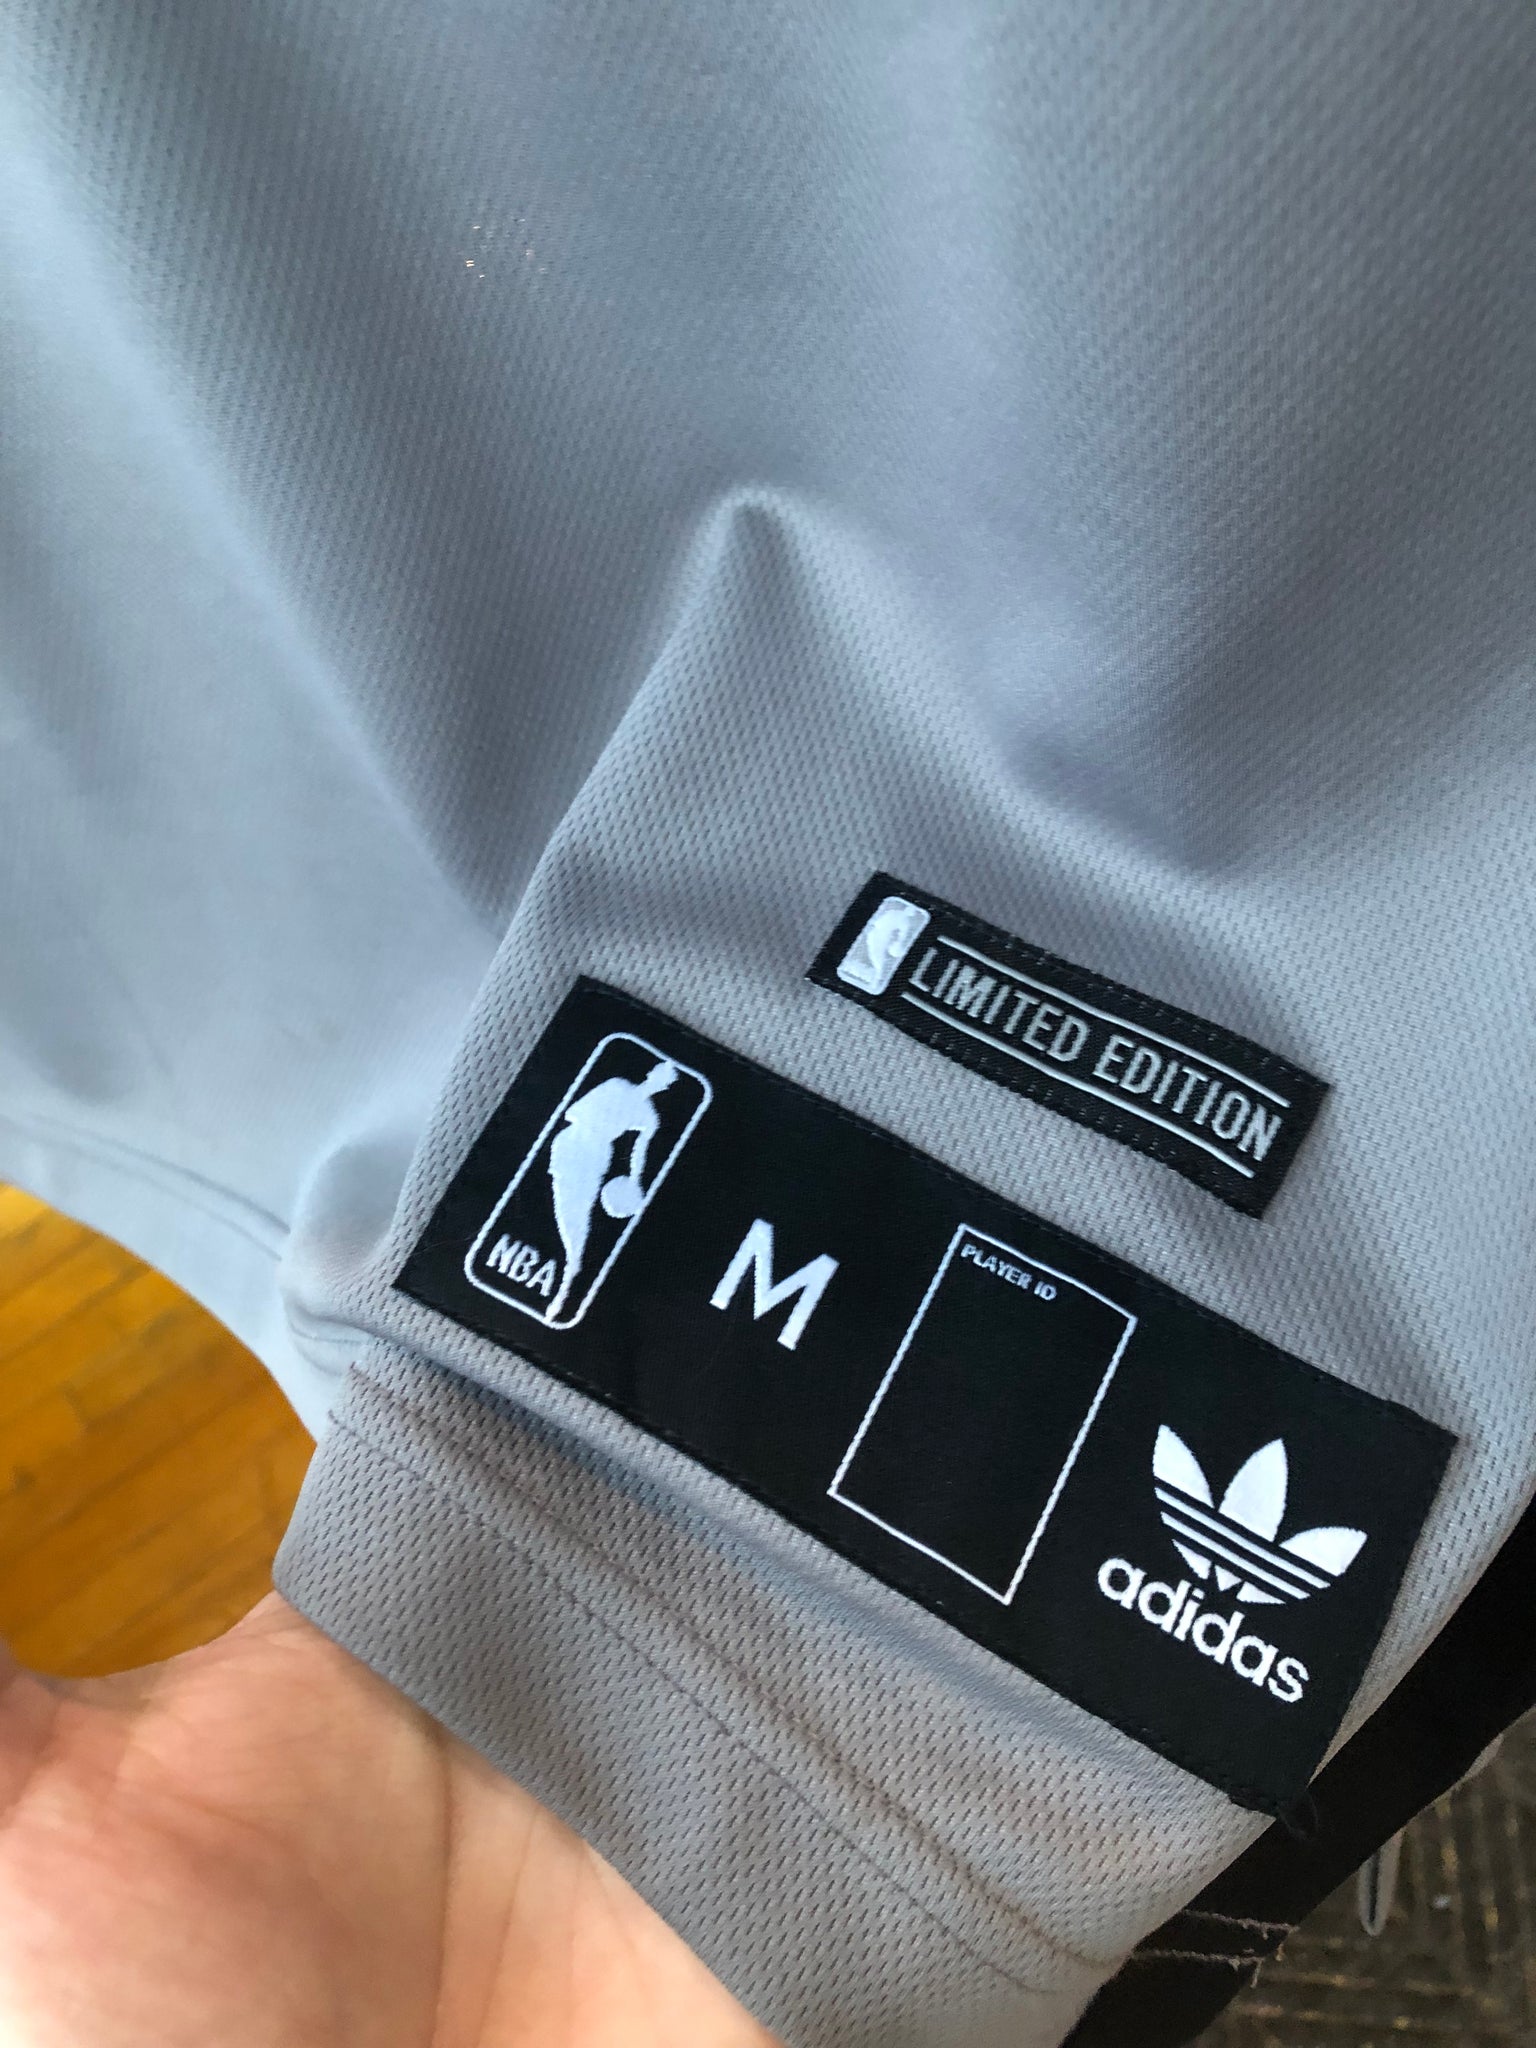 Brooklyn Nets Adidas NBA Jersey #8 Deron Williams Basketball Shirt Men Size  S